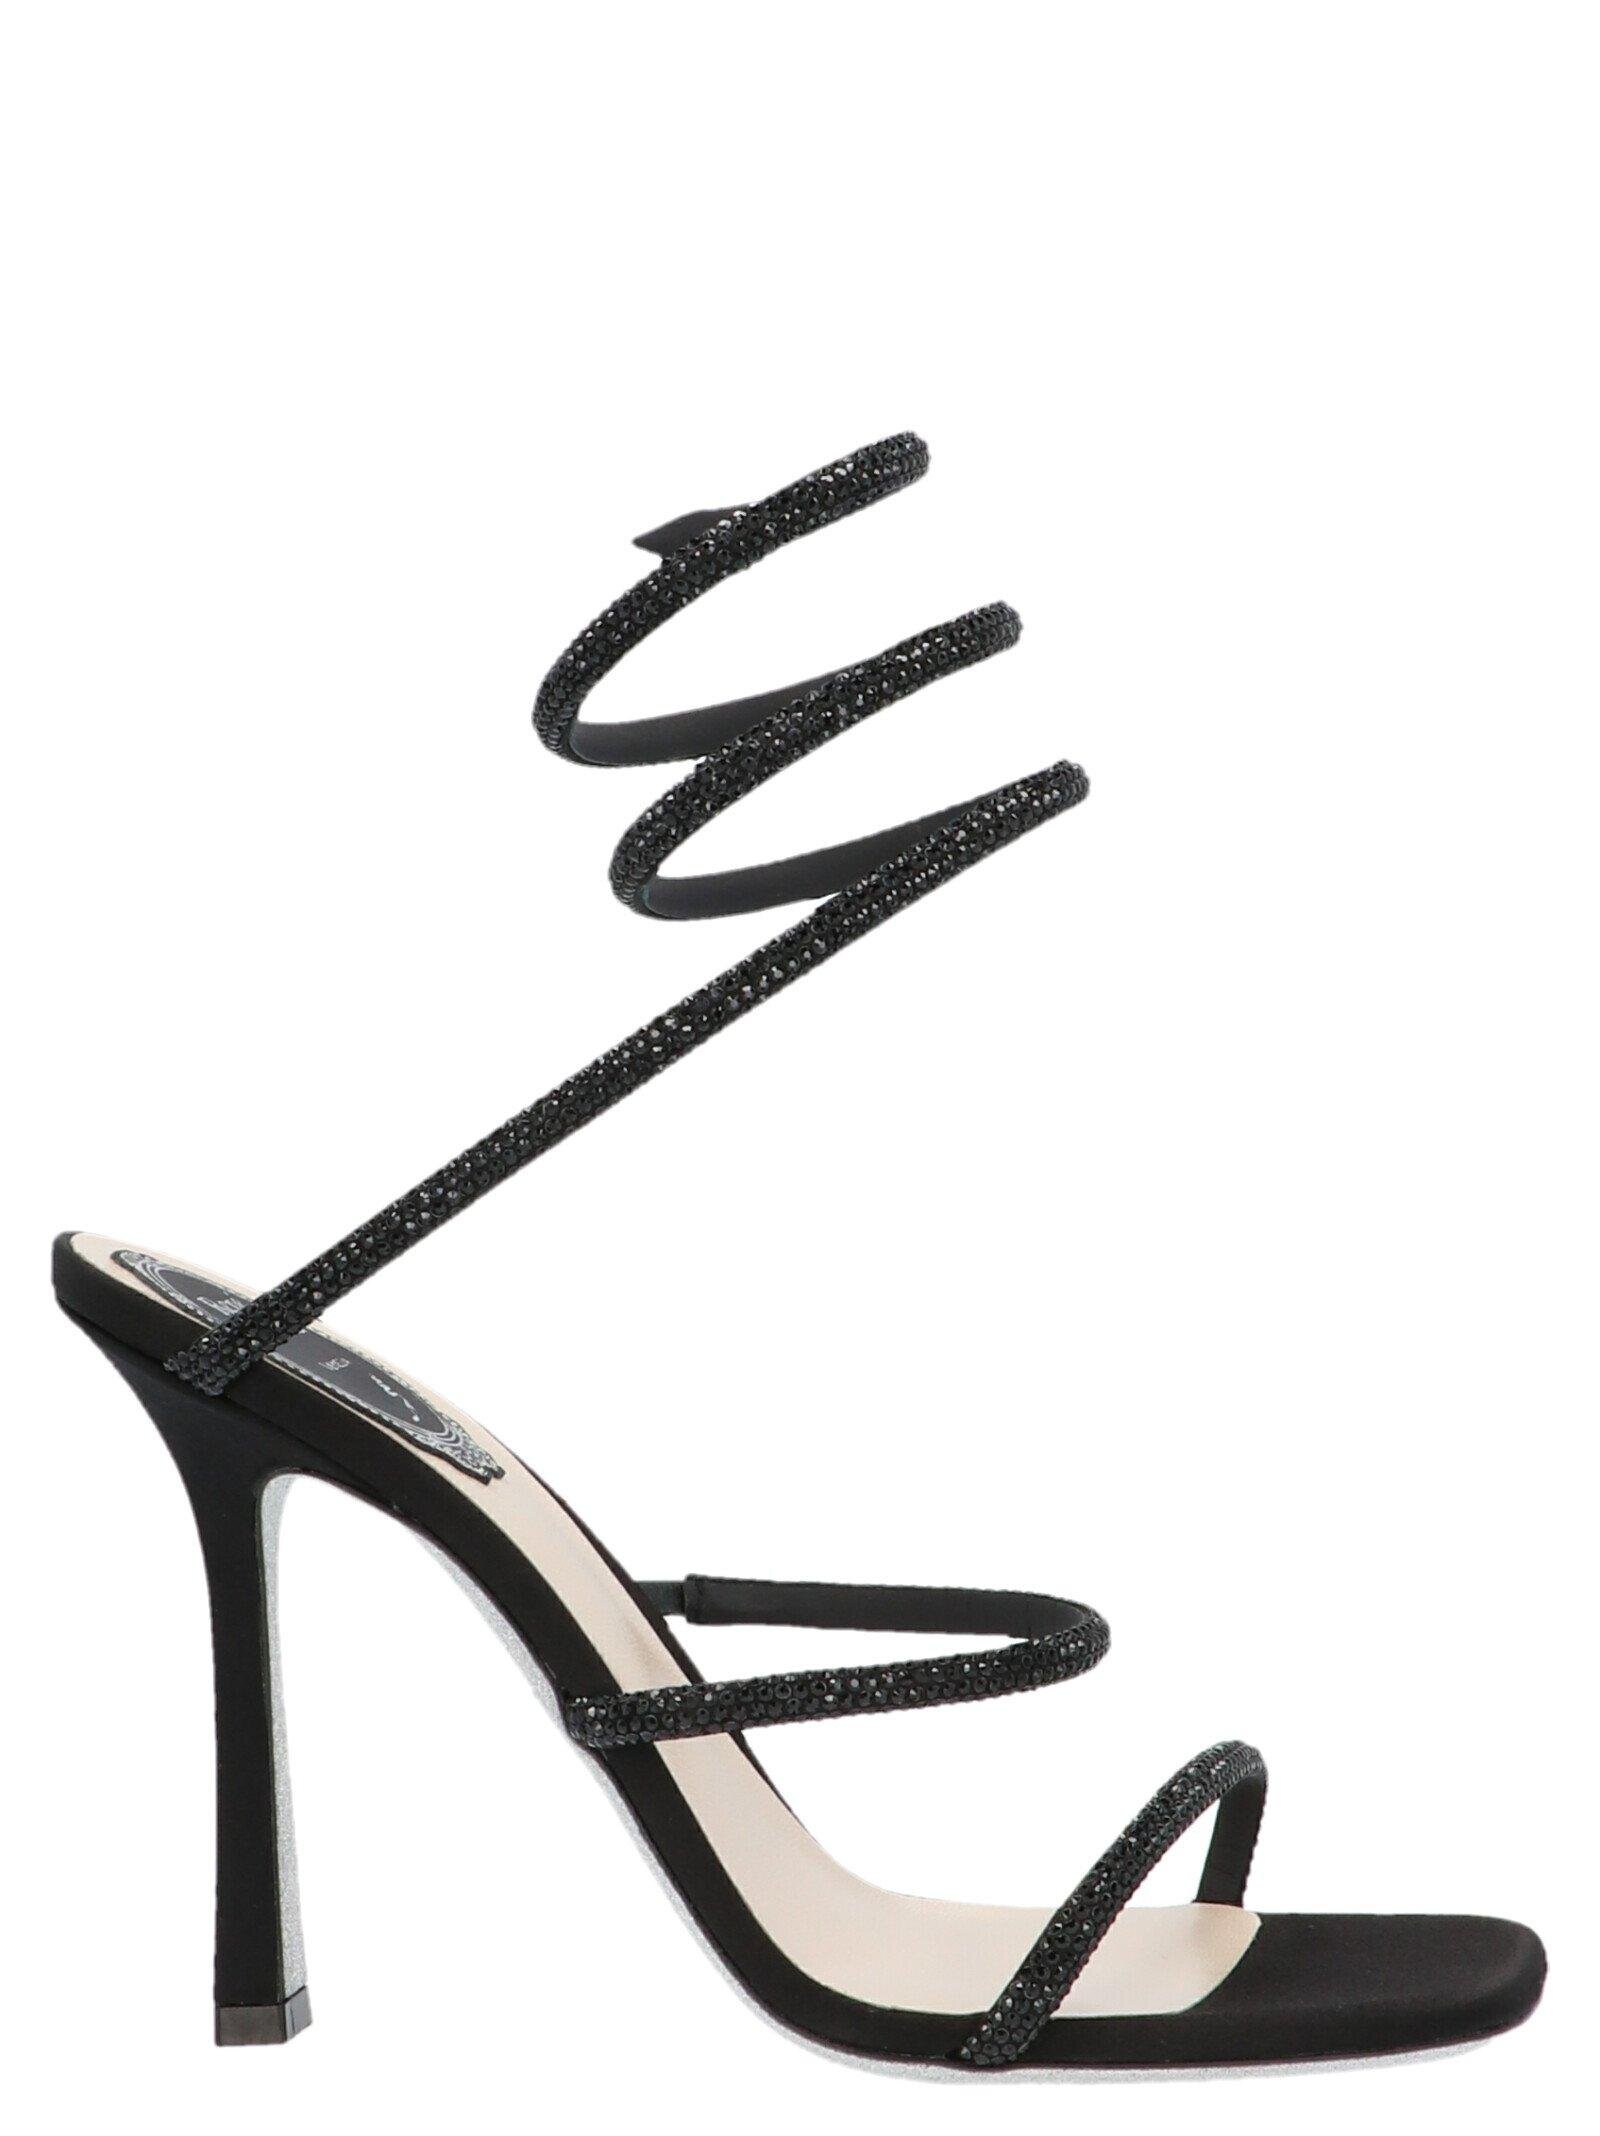 René Caovilla Cleo Sandals in Crystal-Embellished Black Leather.jpg